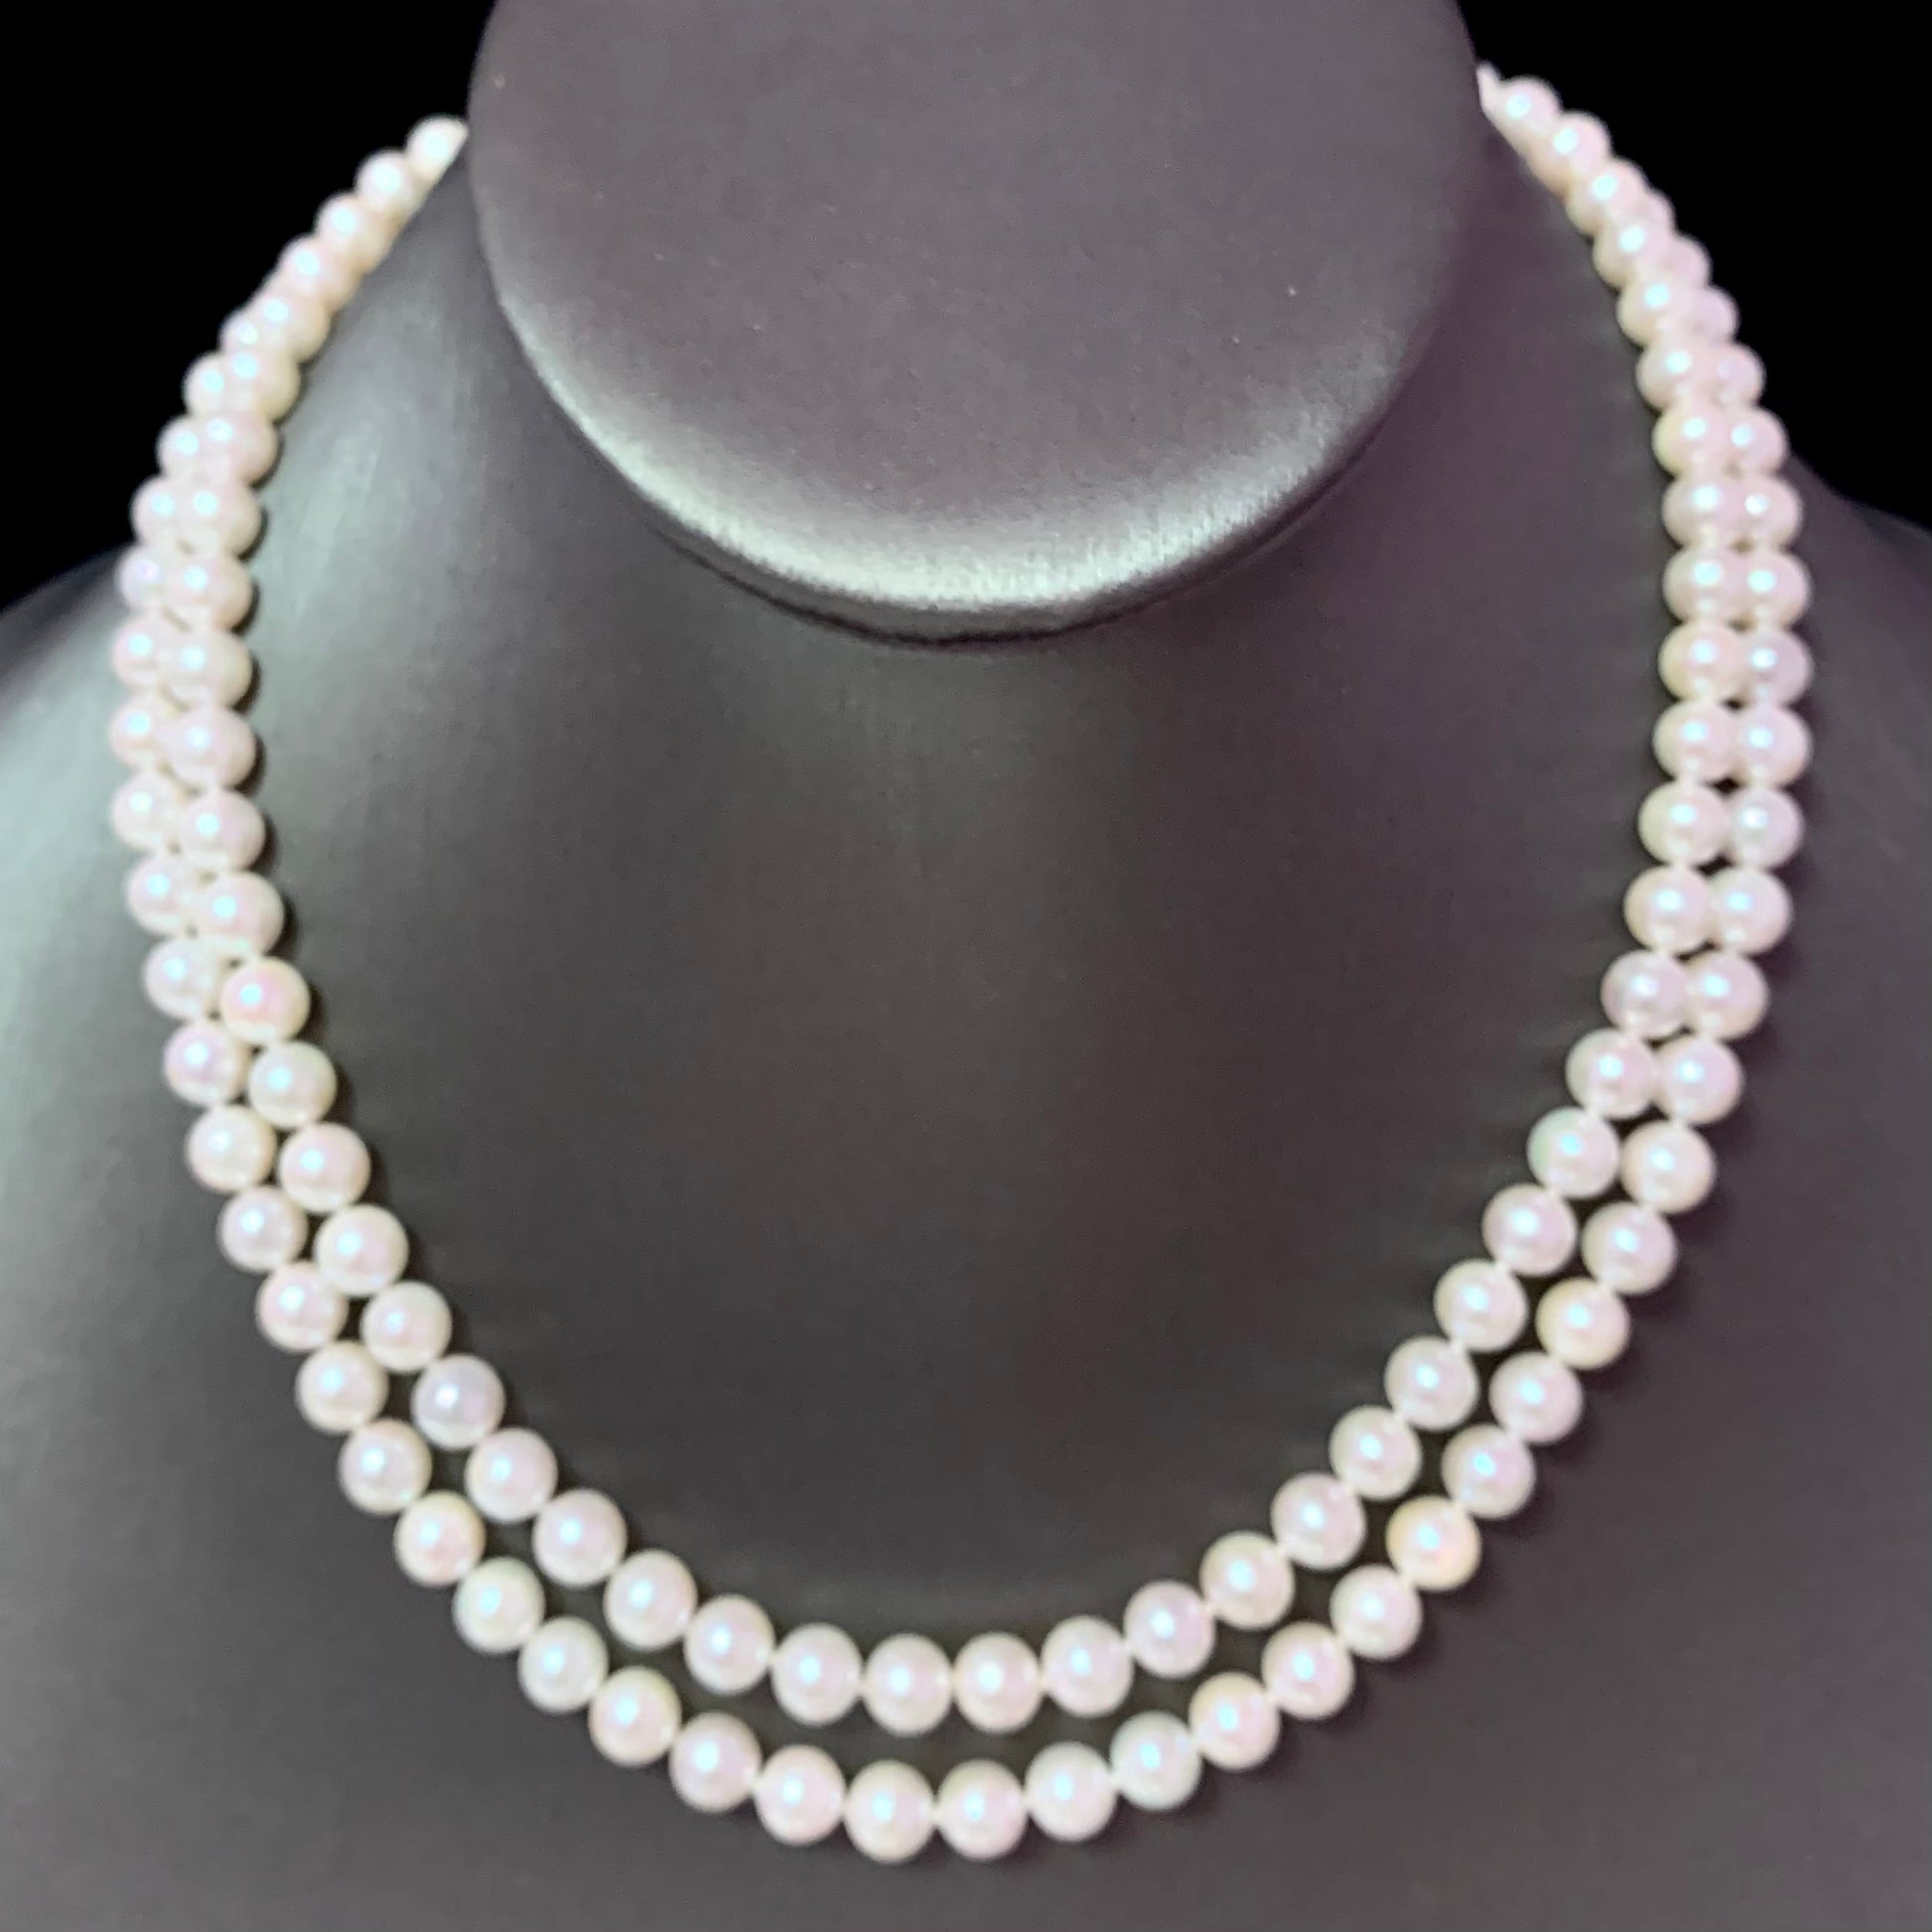 Diamond Akoya Pearl 2-Strand Necklace 17" 18k Gold 6.5mm Certified $6,900 120673 - Certified Estate Jewelry